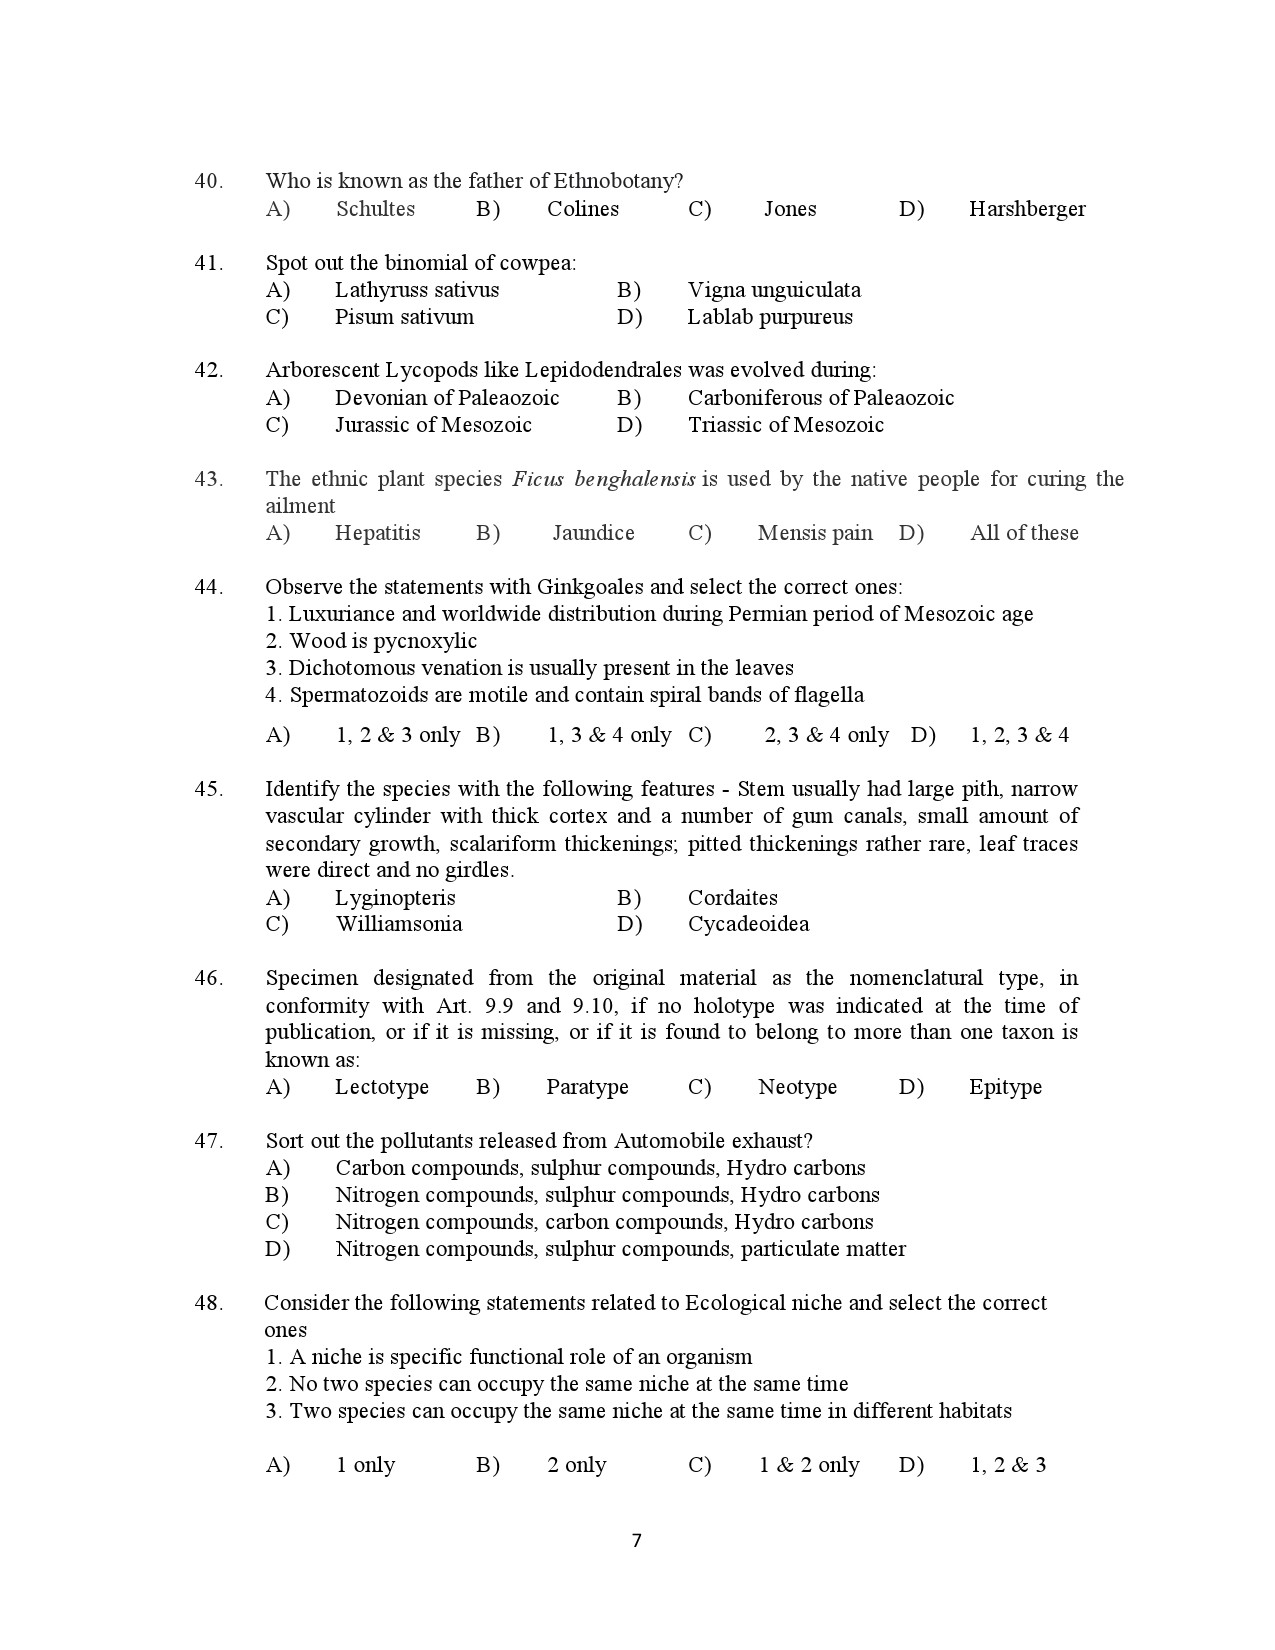 Kerala SET Botany Exam Question Paper July 2021 7